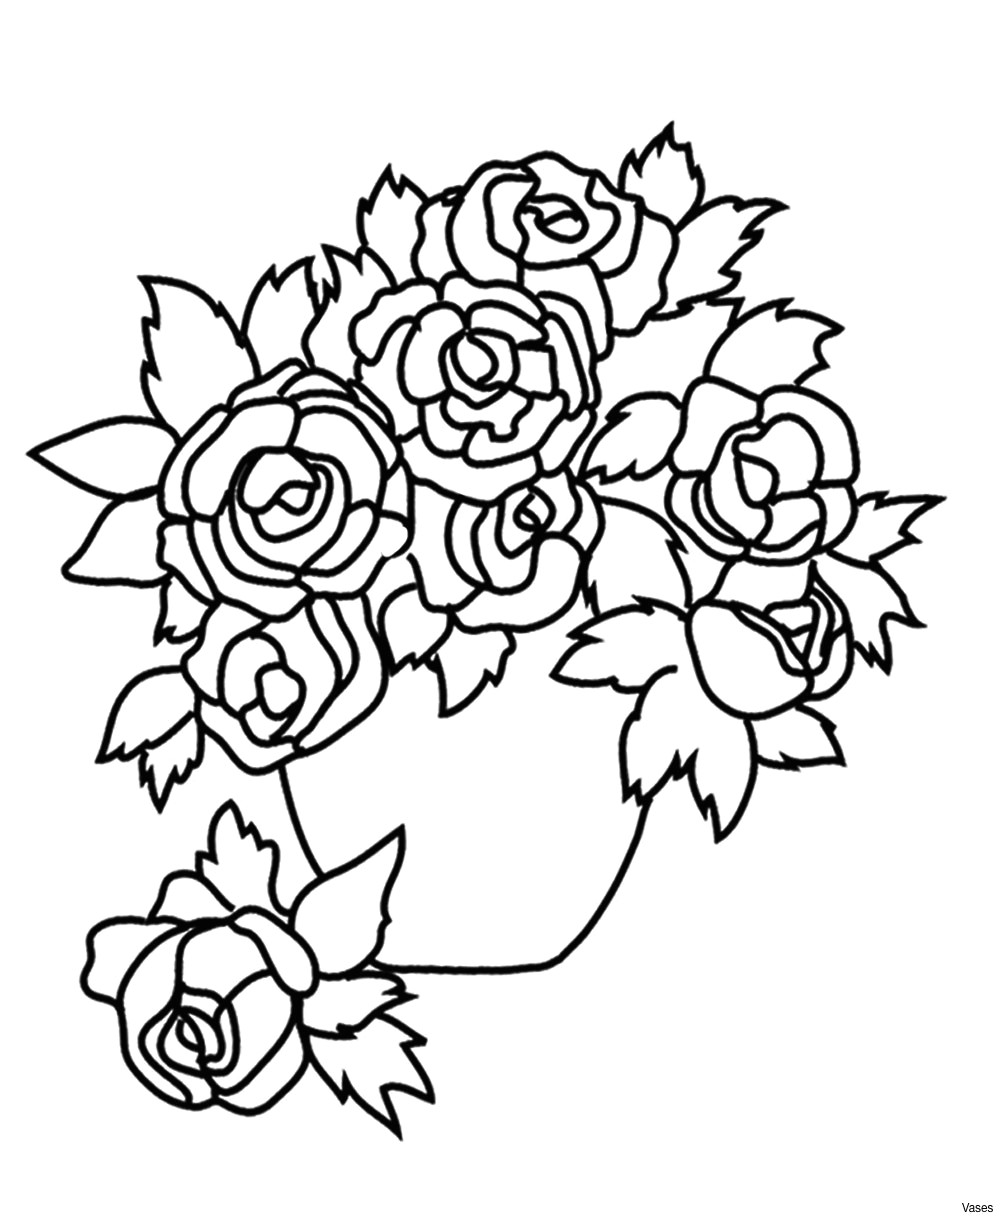 Drawing Of A Rose In A Vase Rose Flower Vase Coloring Page Www tollebild Com